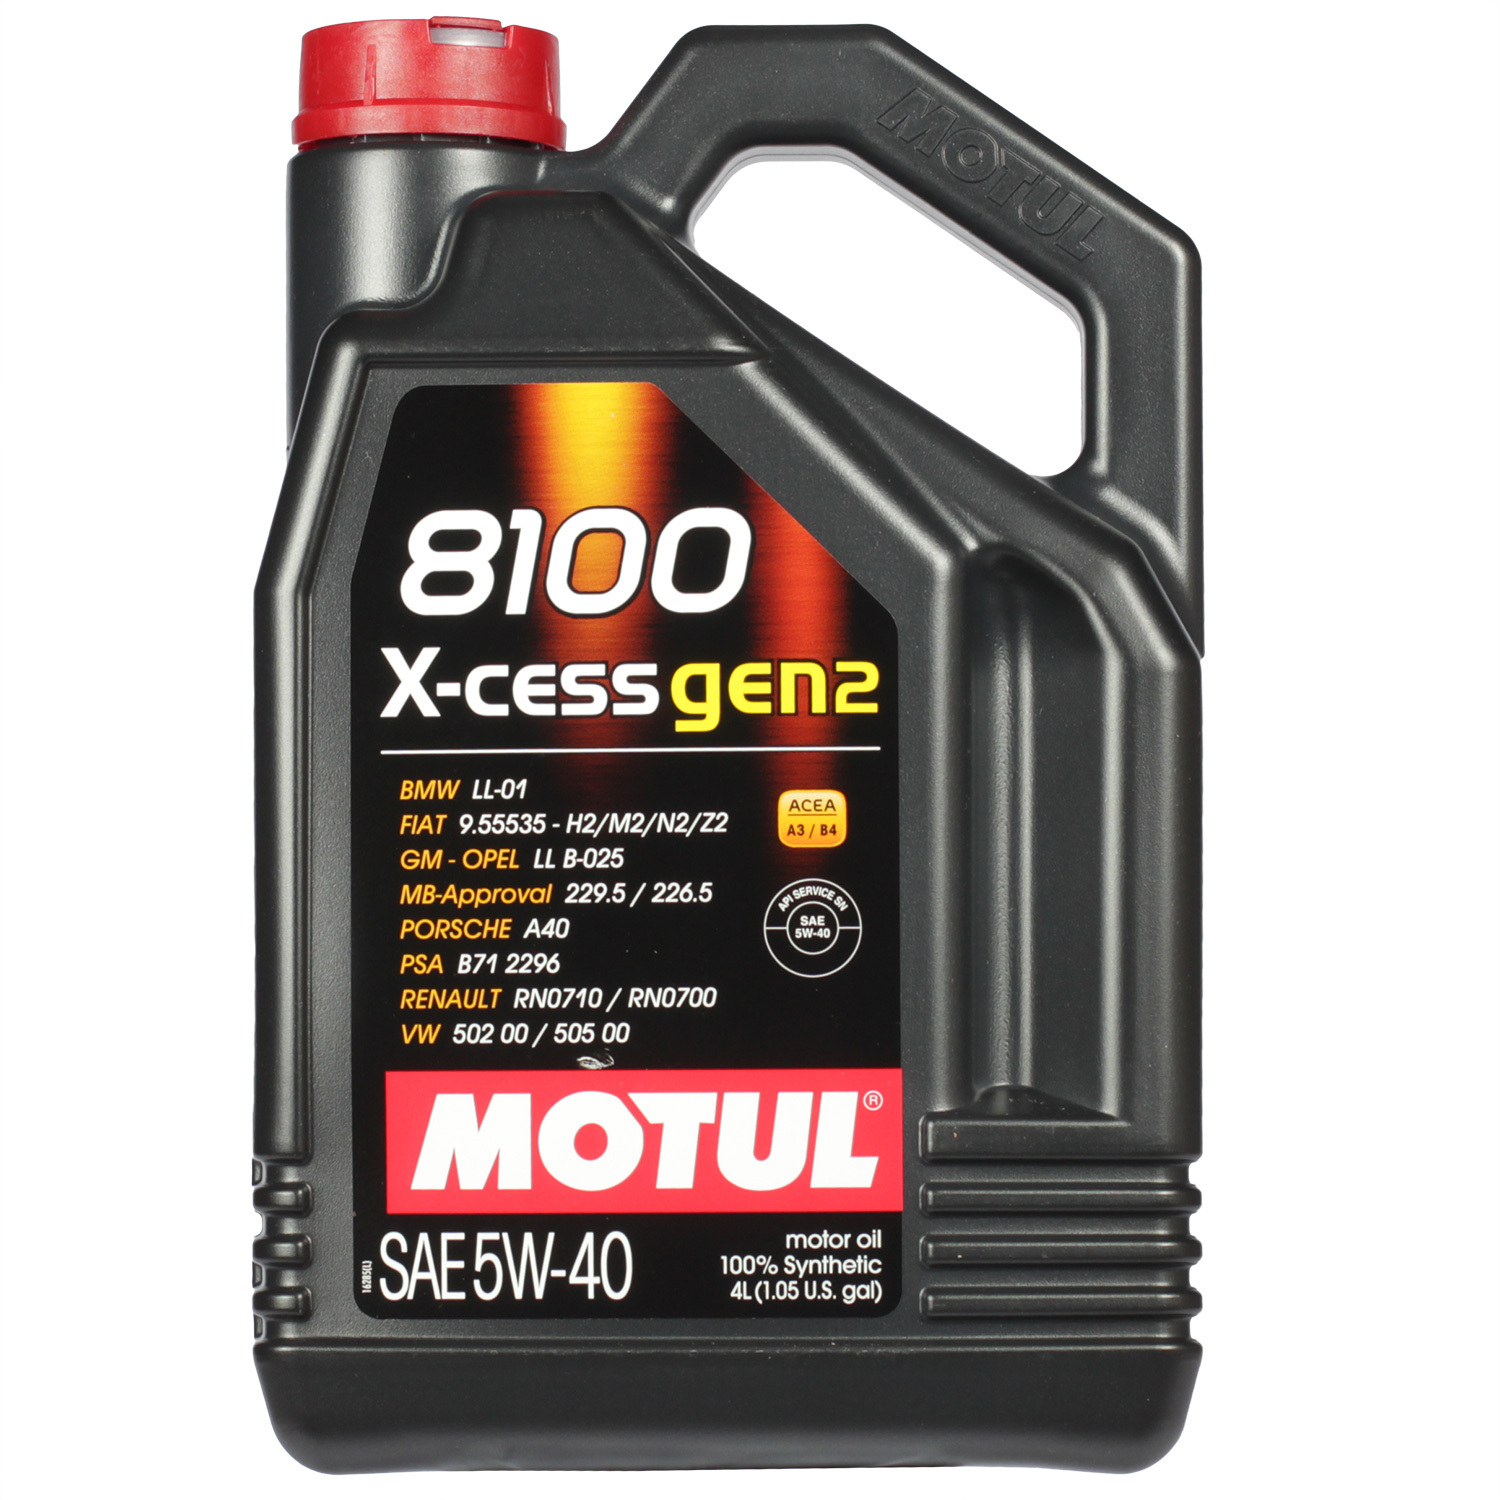 Motul Моторное масло Motul 8100 X-cess gen2 5W-40, 4 л motul моторное масло motul 8100 x clean 5w 30 1 л